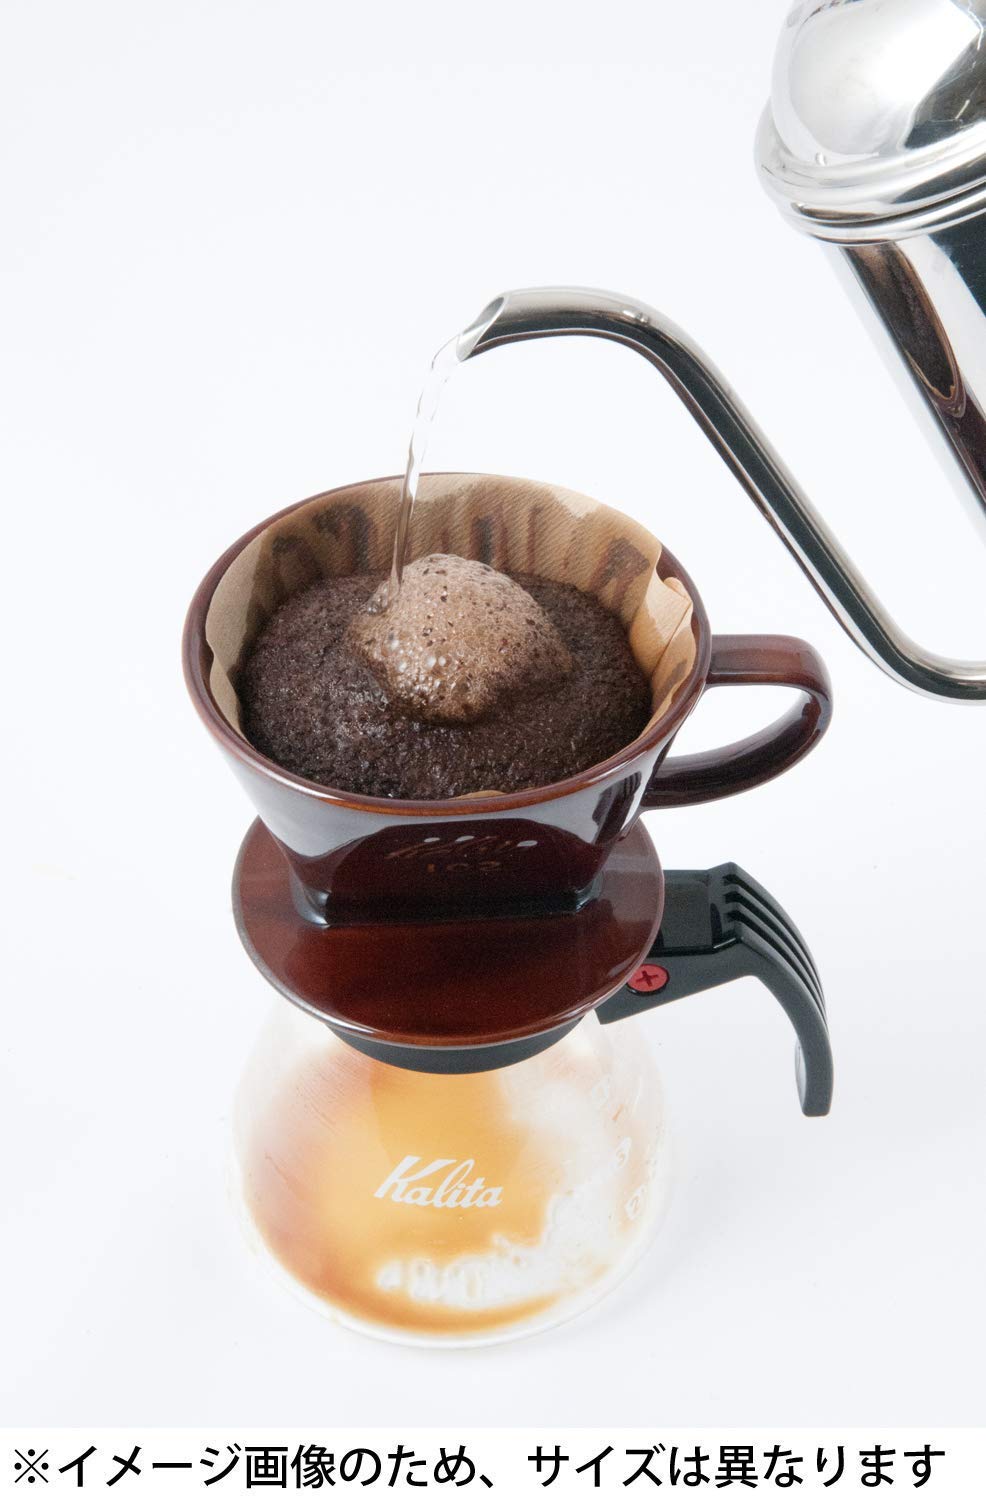 Kalita Style Coffee dripper, 102, 4 cups, Brown